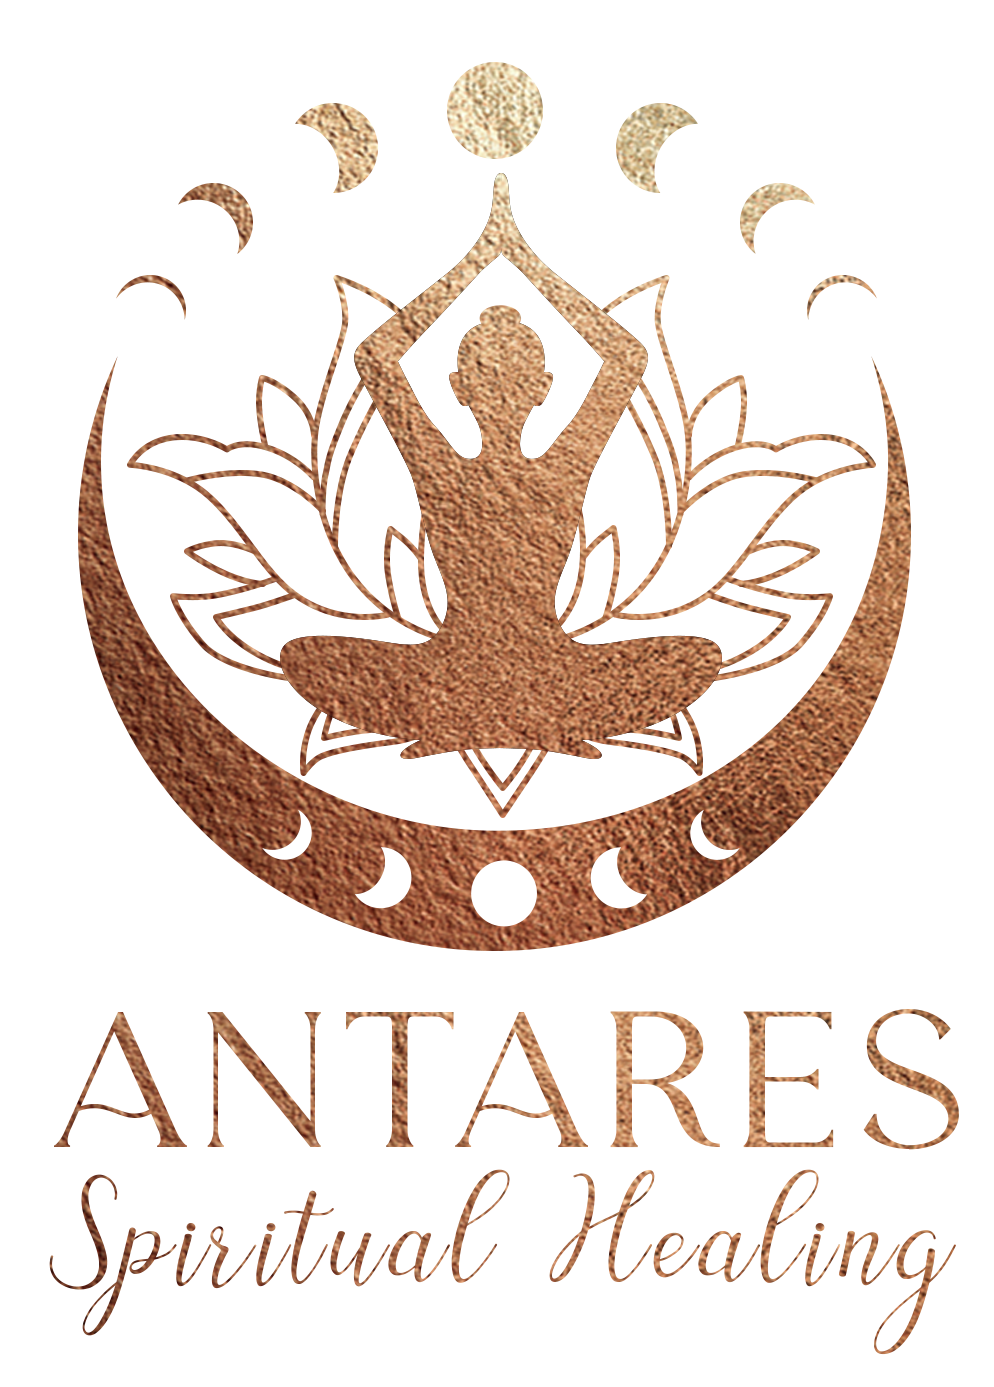 Antares Spiritual Healing